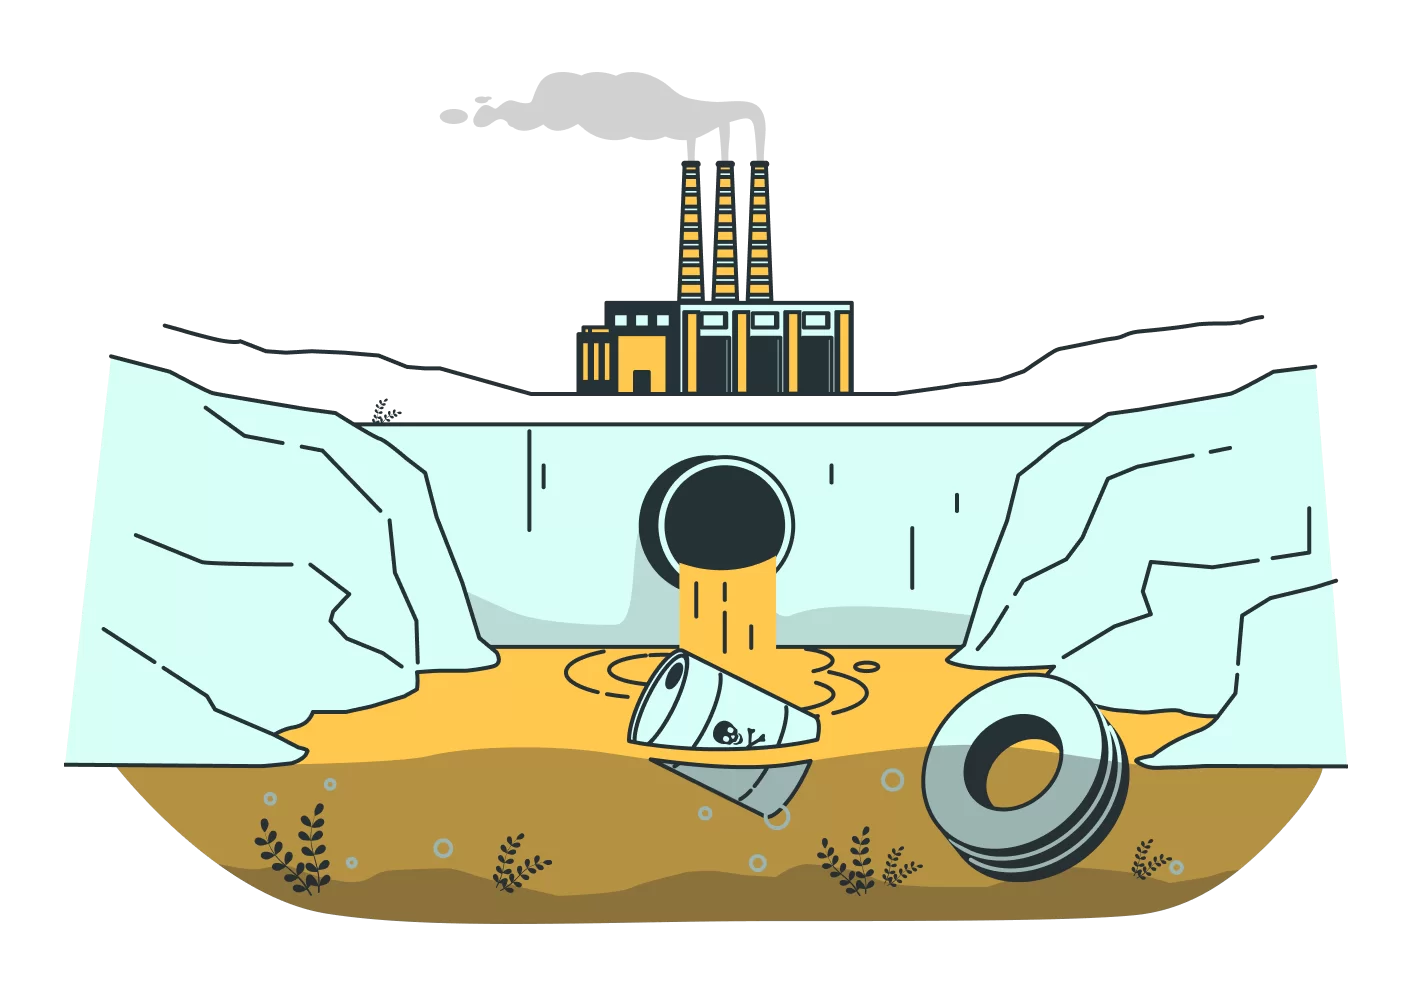 ammonia from sewage plant